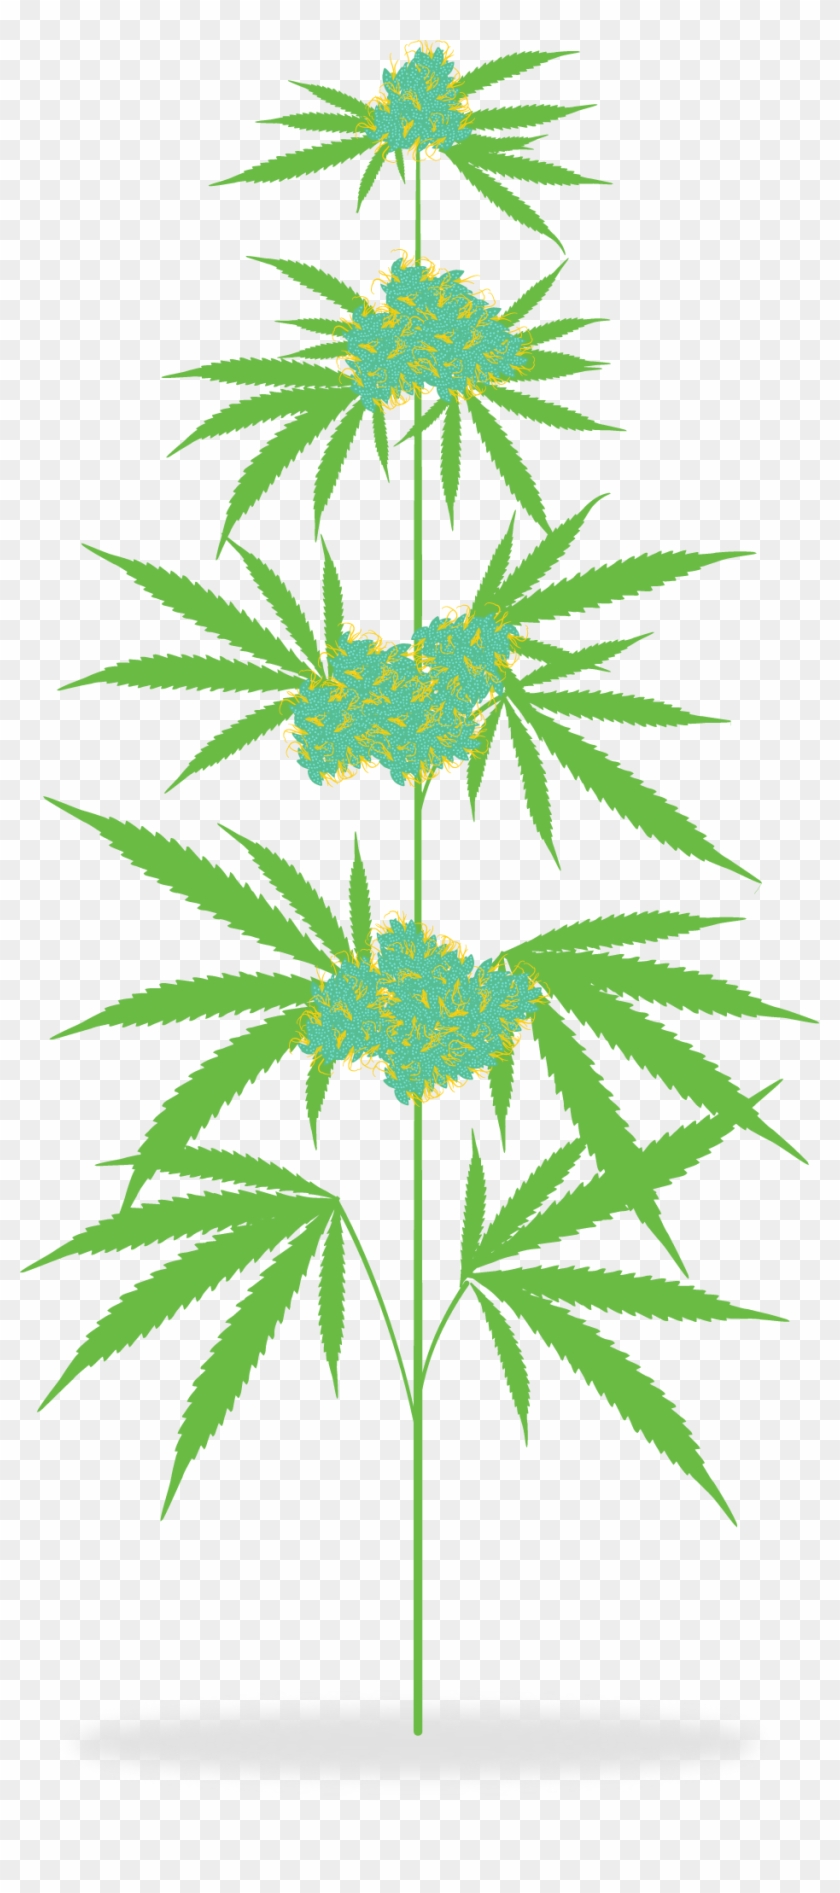 The Cannabis Plant - Cannabis Plant Clipart #530201